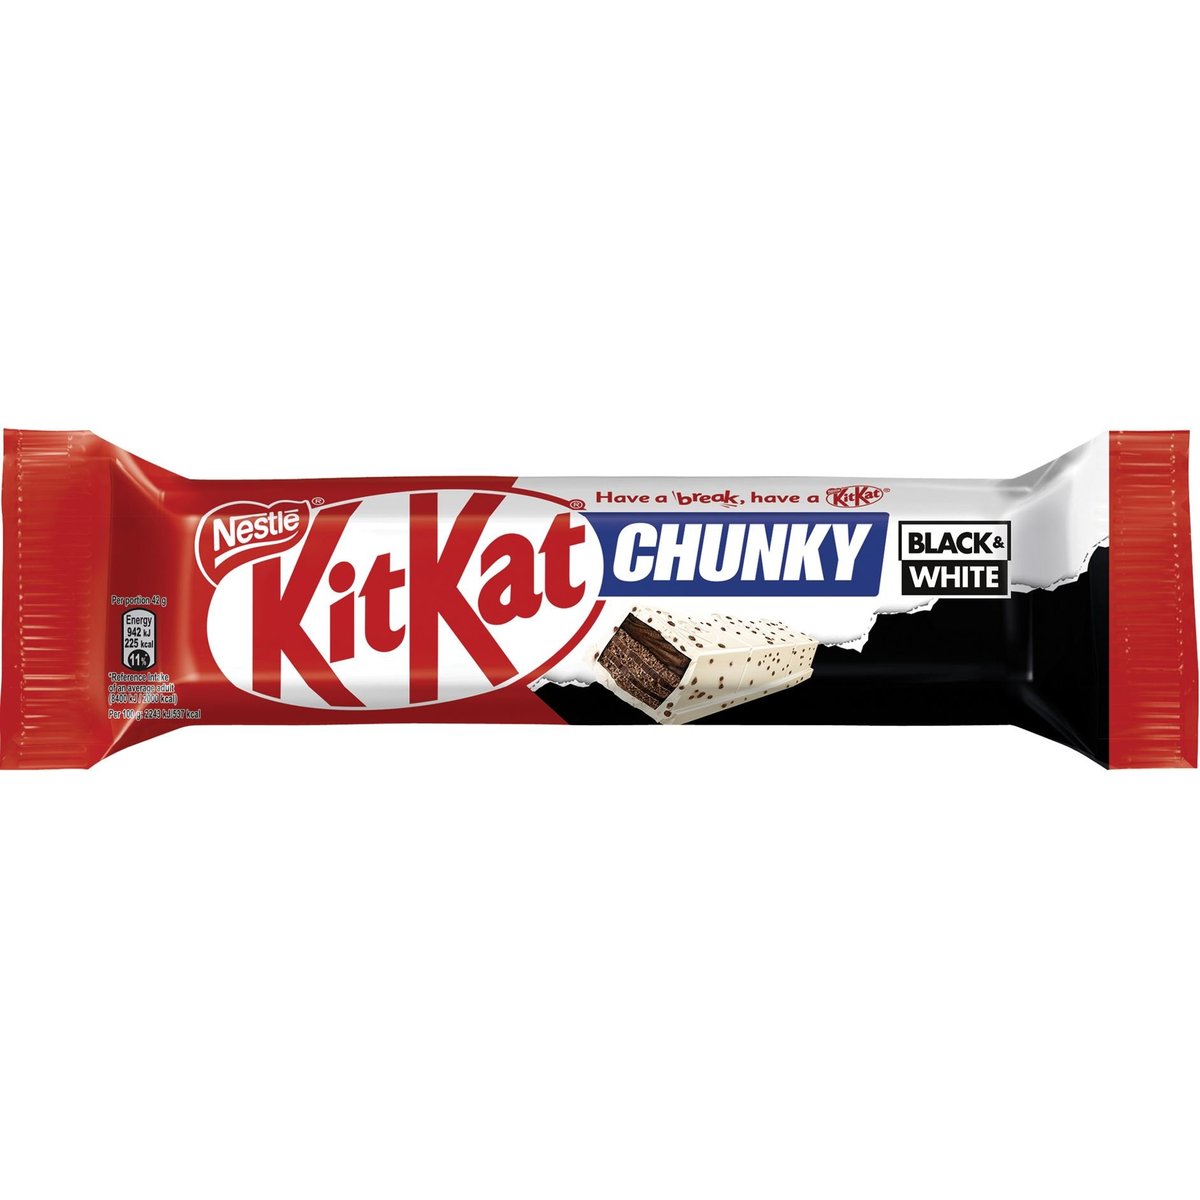 KitKat Chunky black and white